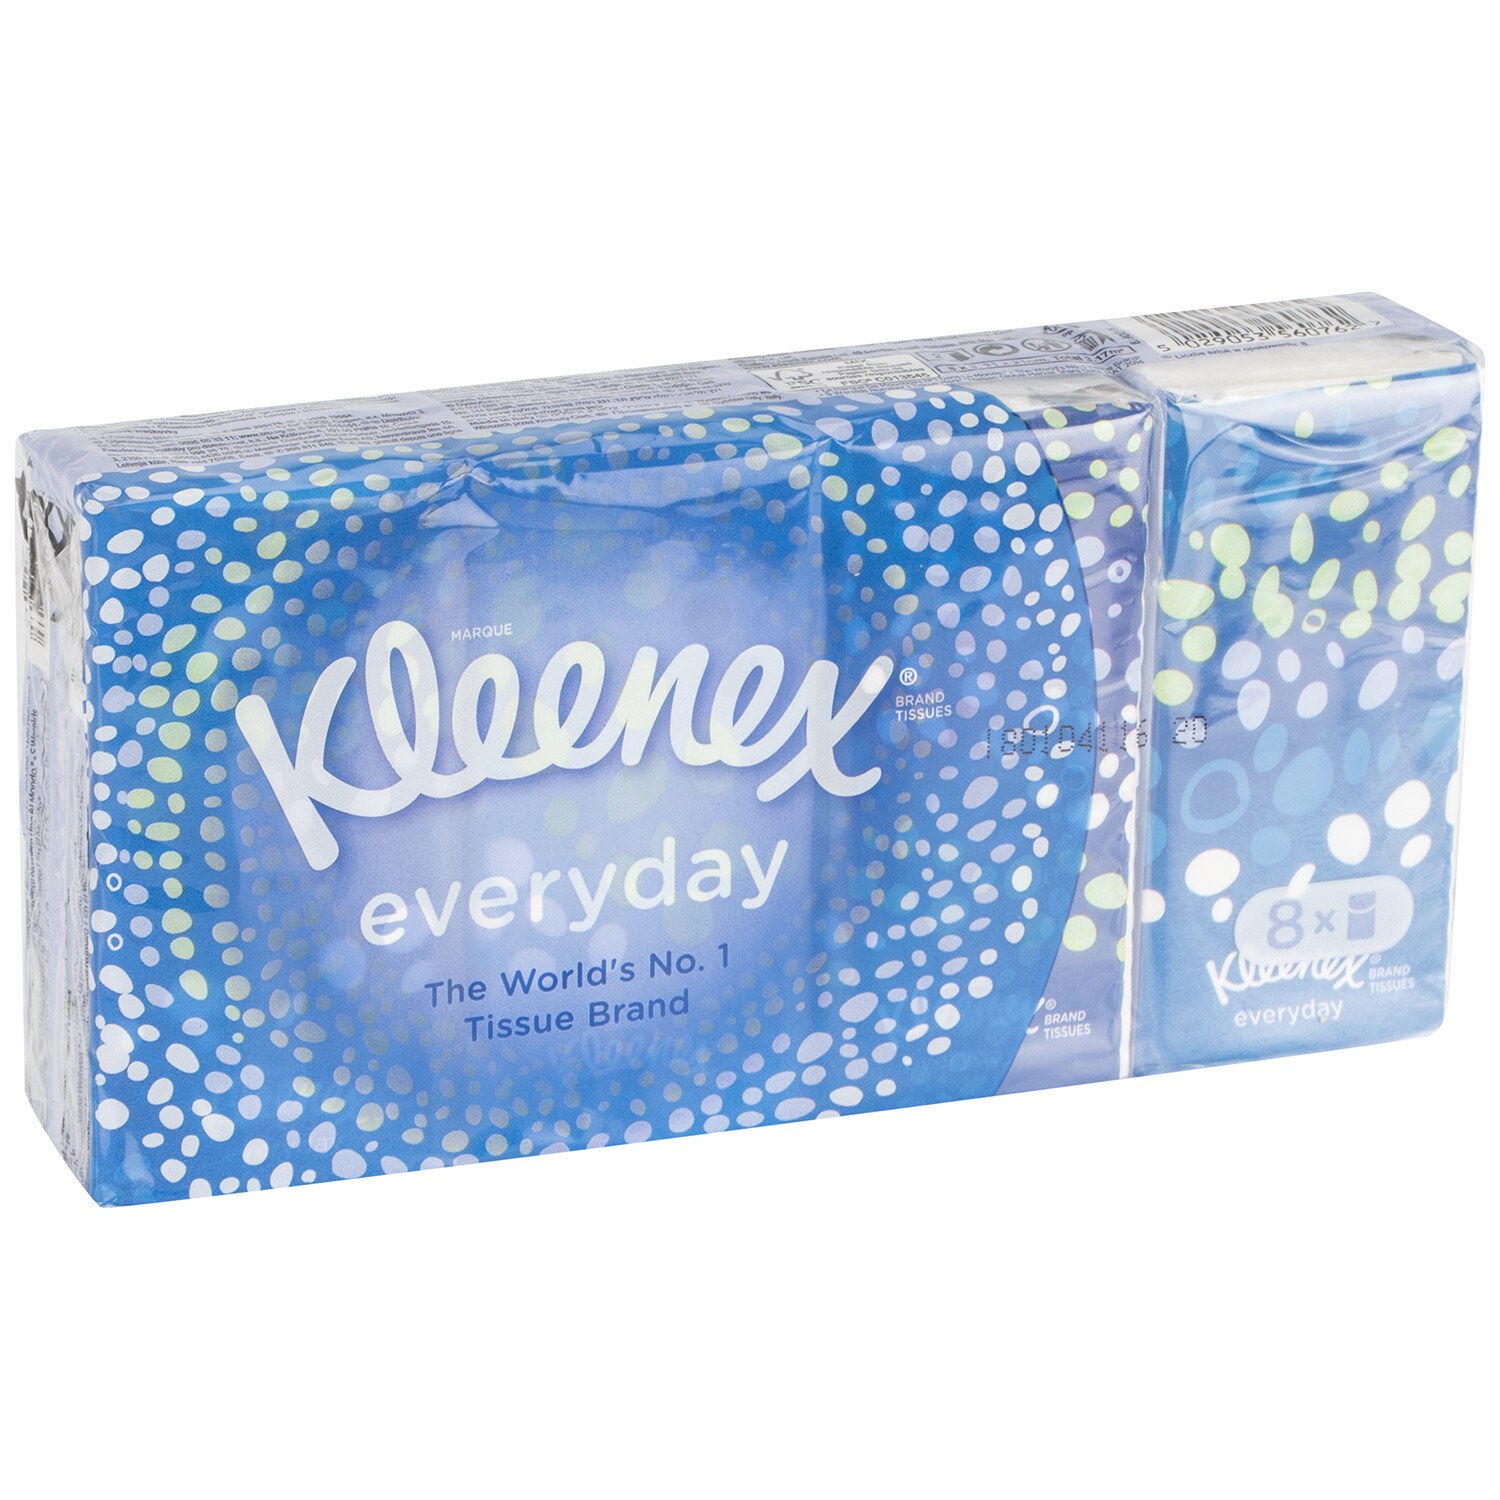 Pack of 8 Kleenex Everyday Tissues Image